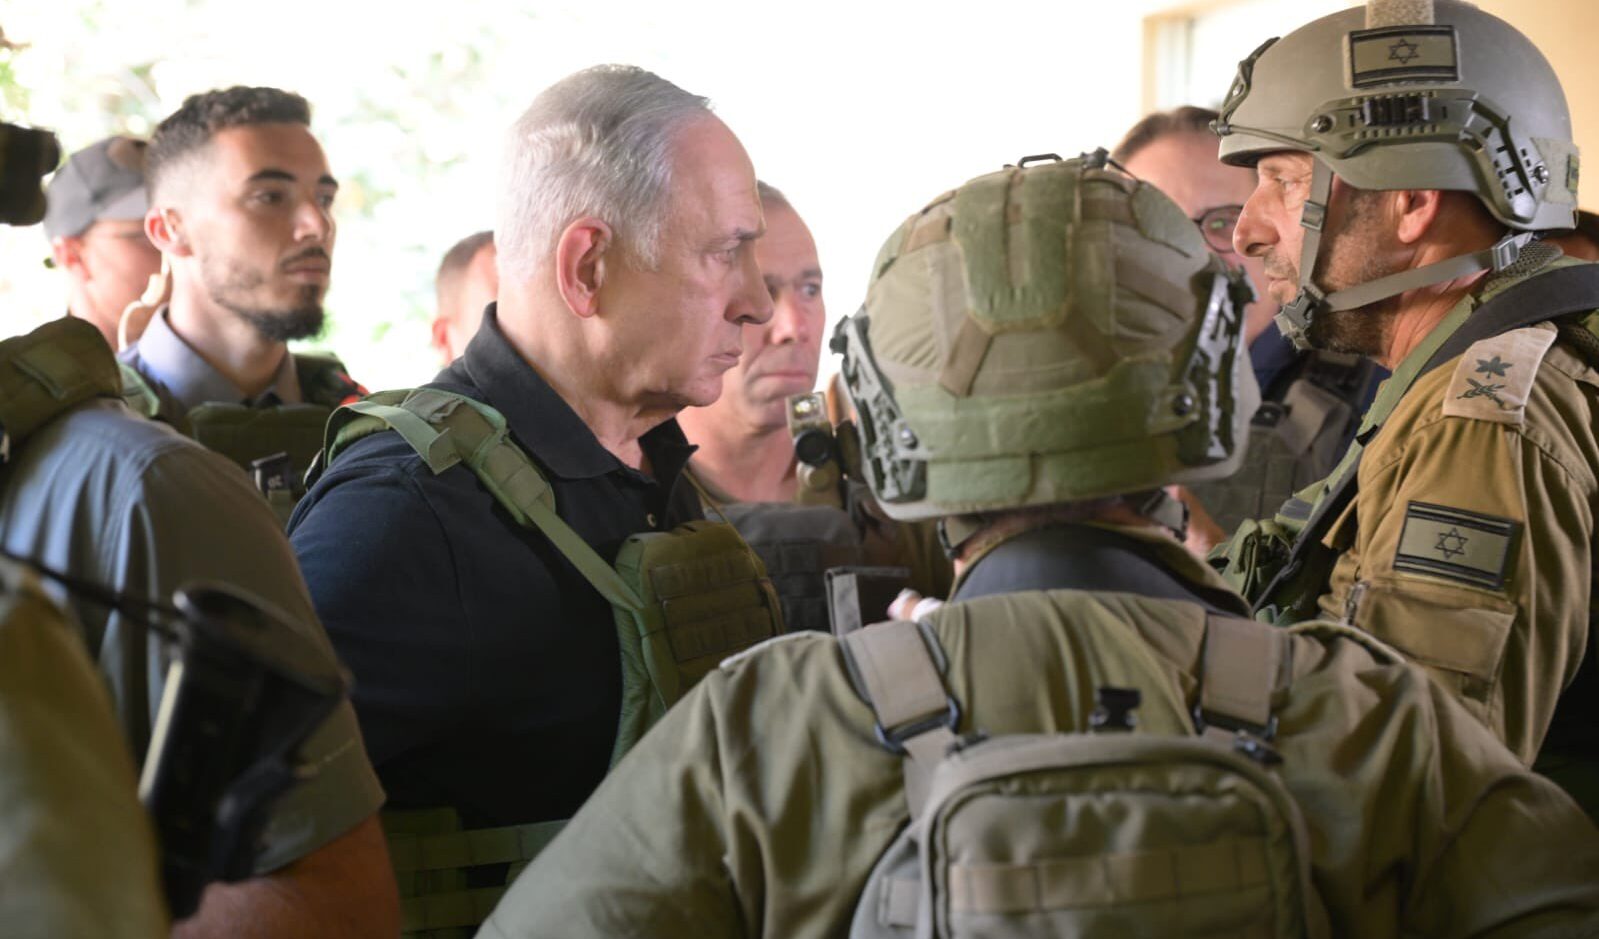 Netanyahu esalta il caos: "La nostra è una guerra giusta"